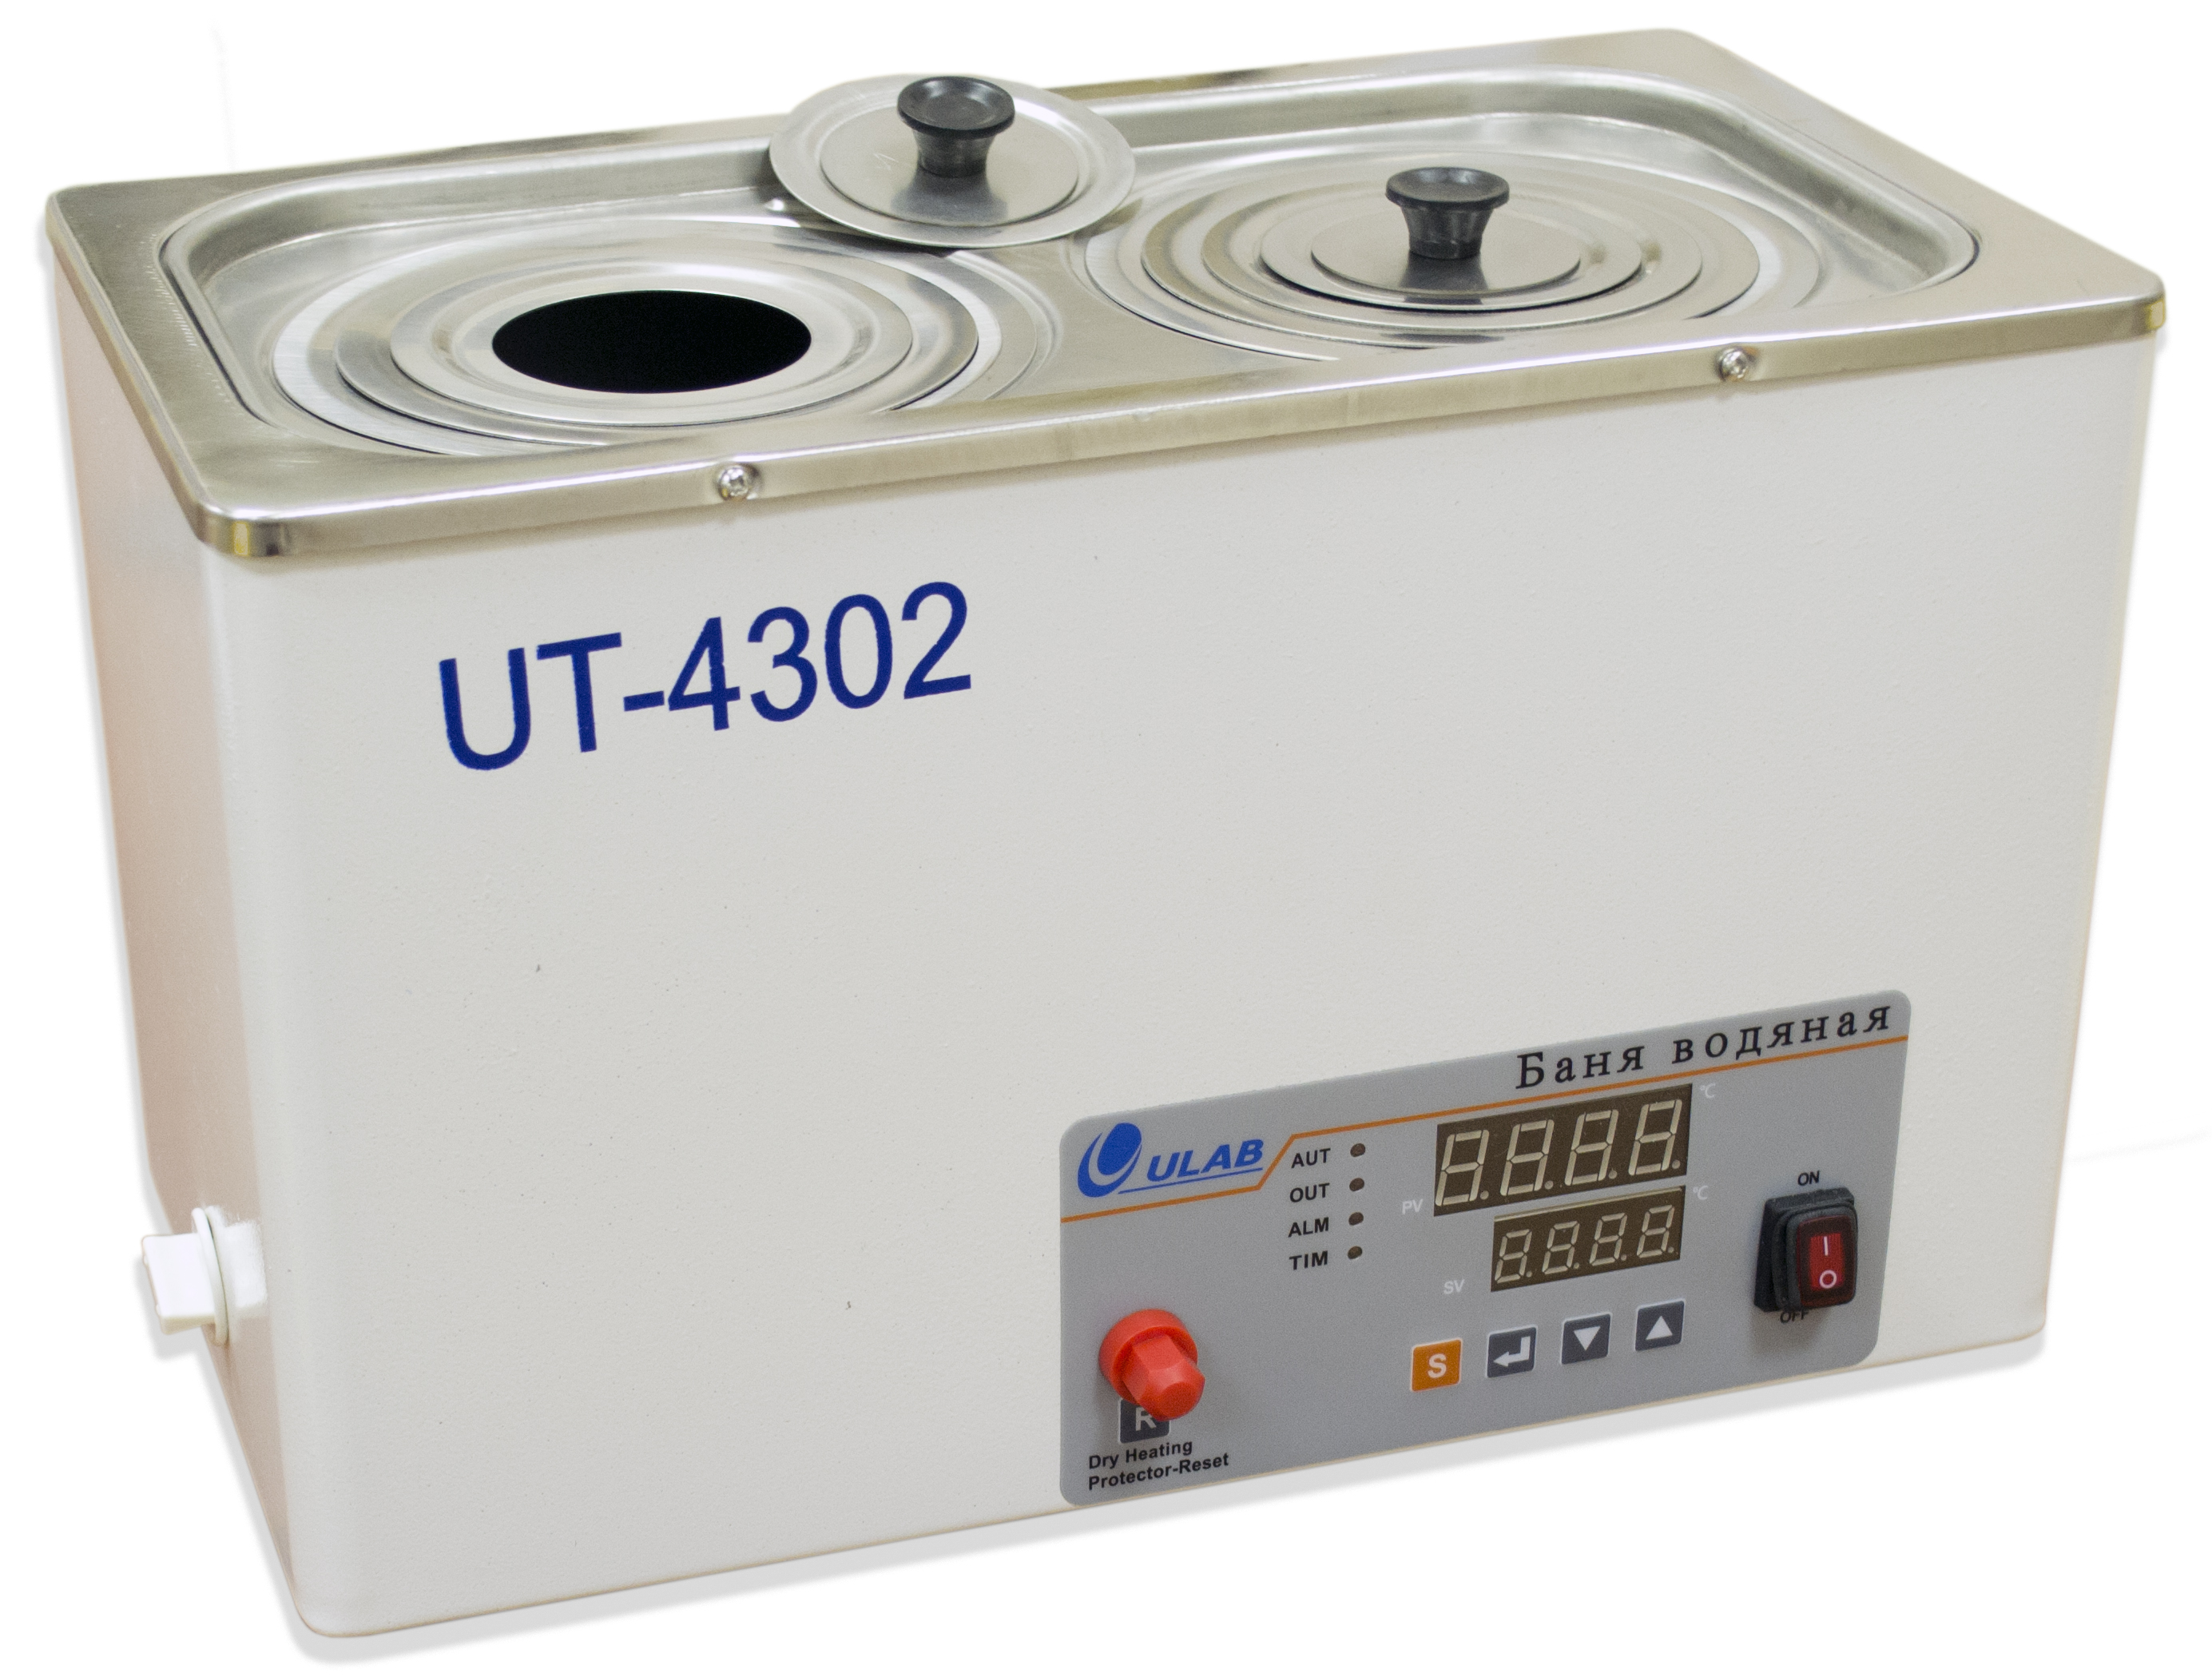 UT-4302 Баня водяная двухместная, ULAB®